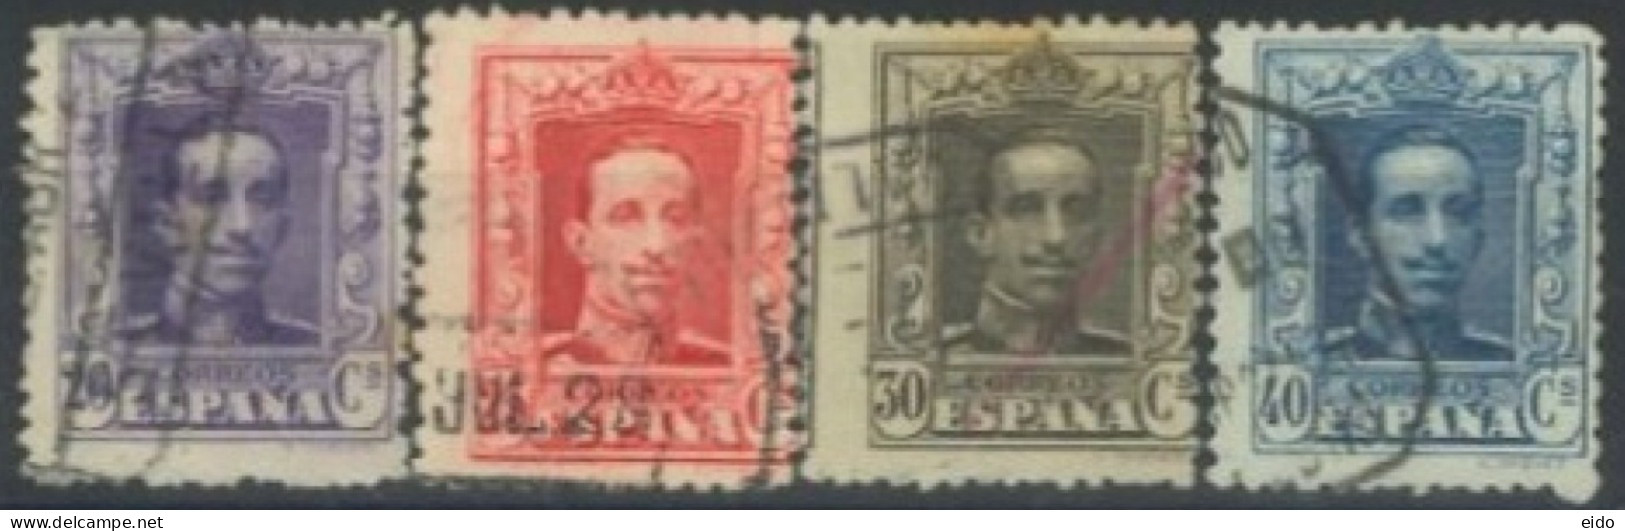 SPAIN, 1922/26, KING ALFONSO XIII STAMPS SET OF 4 # 337/40, USED. - Gebruikt